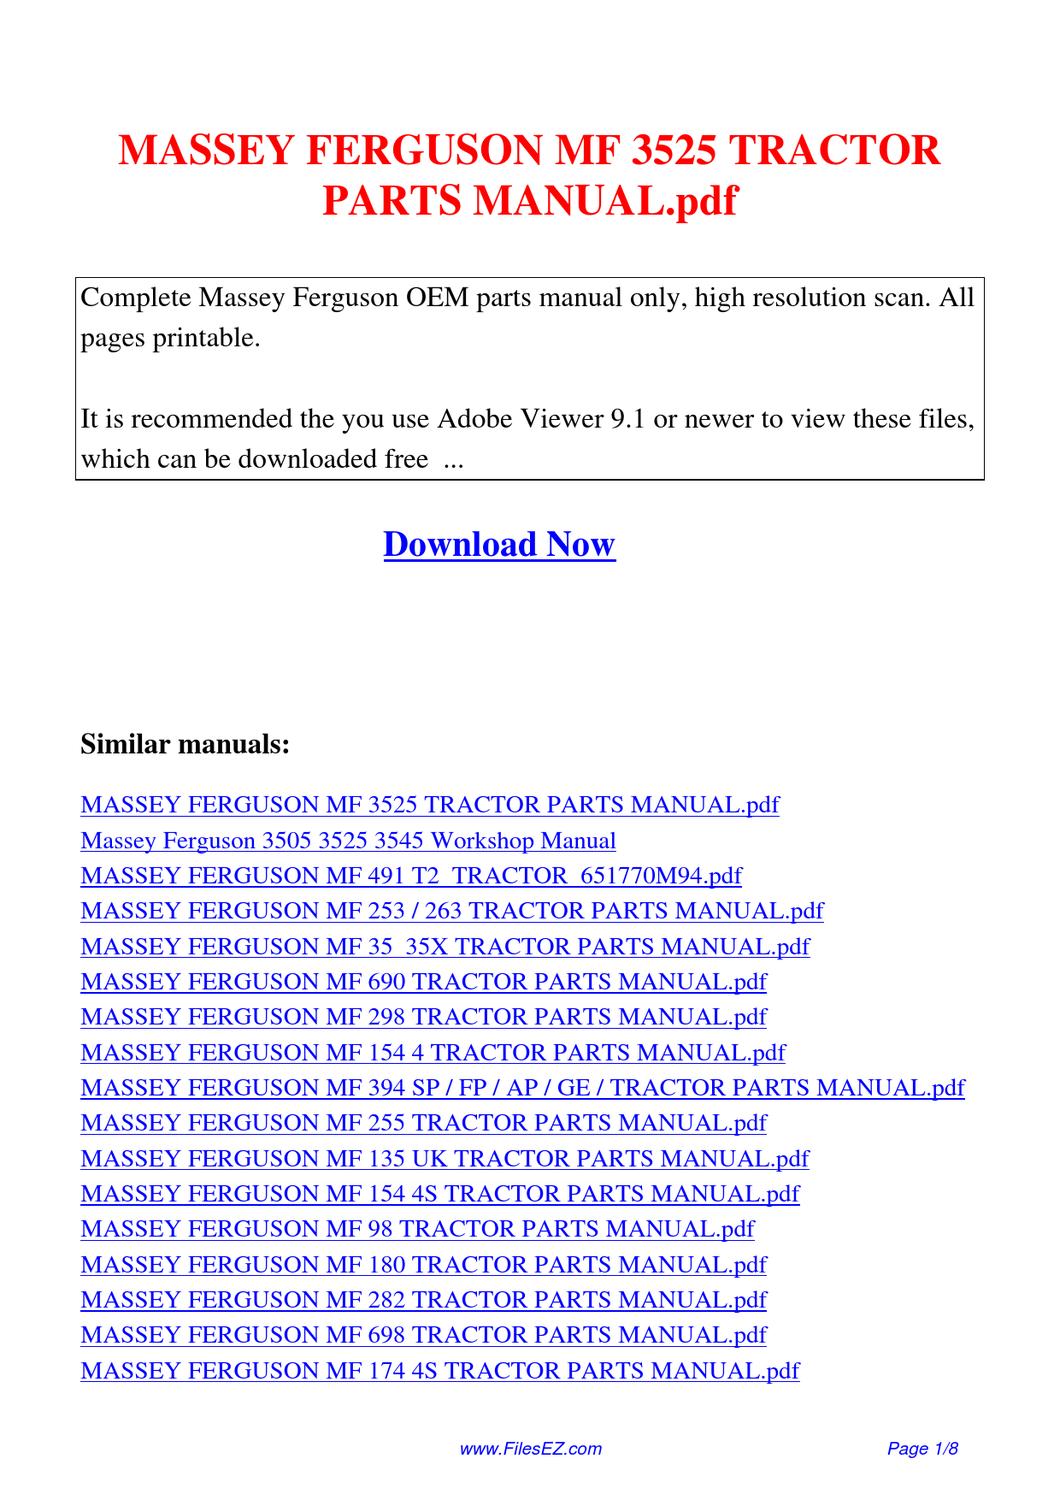 Massey Ferguson Shop Manual Download